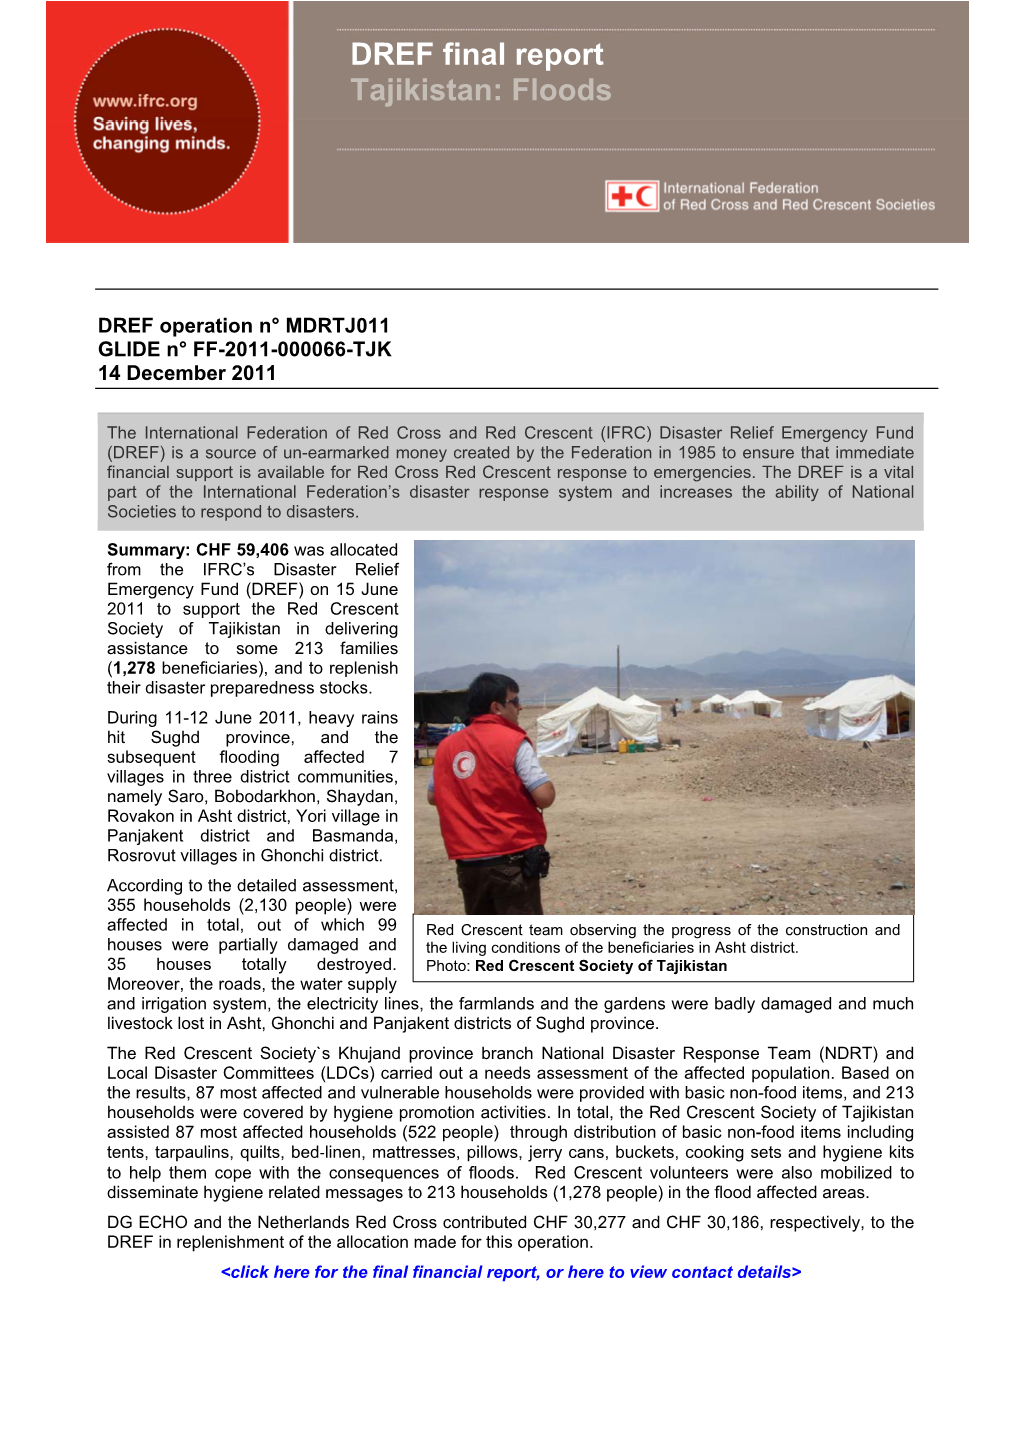 DREF Final Report Tajikistan: Floods